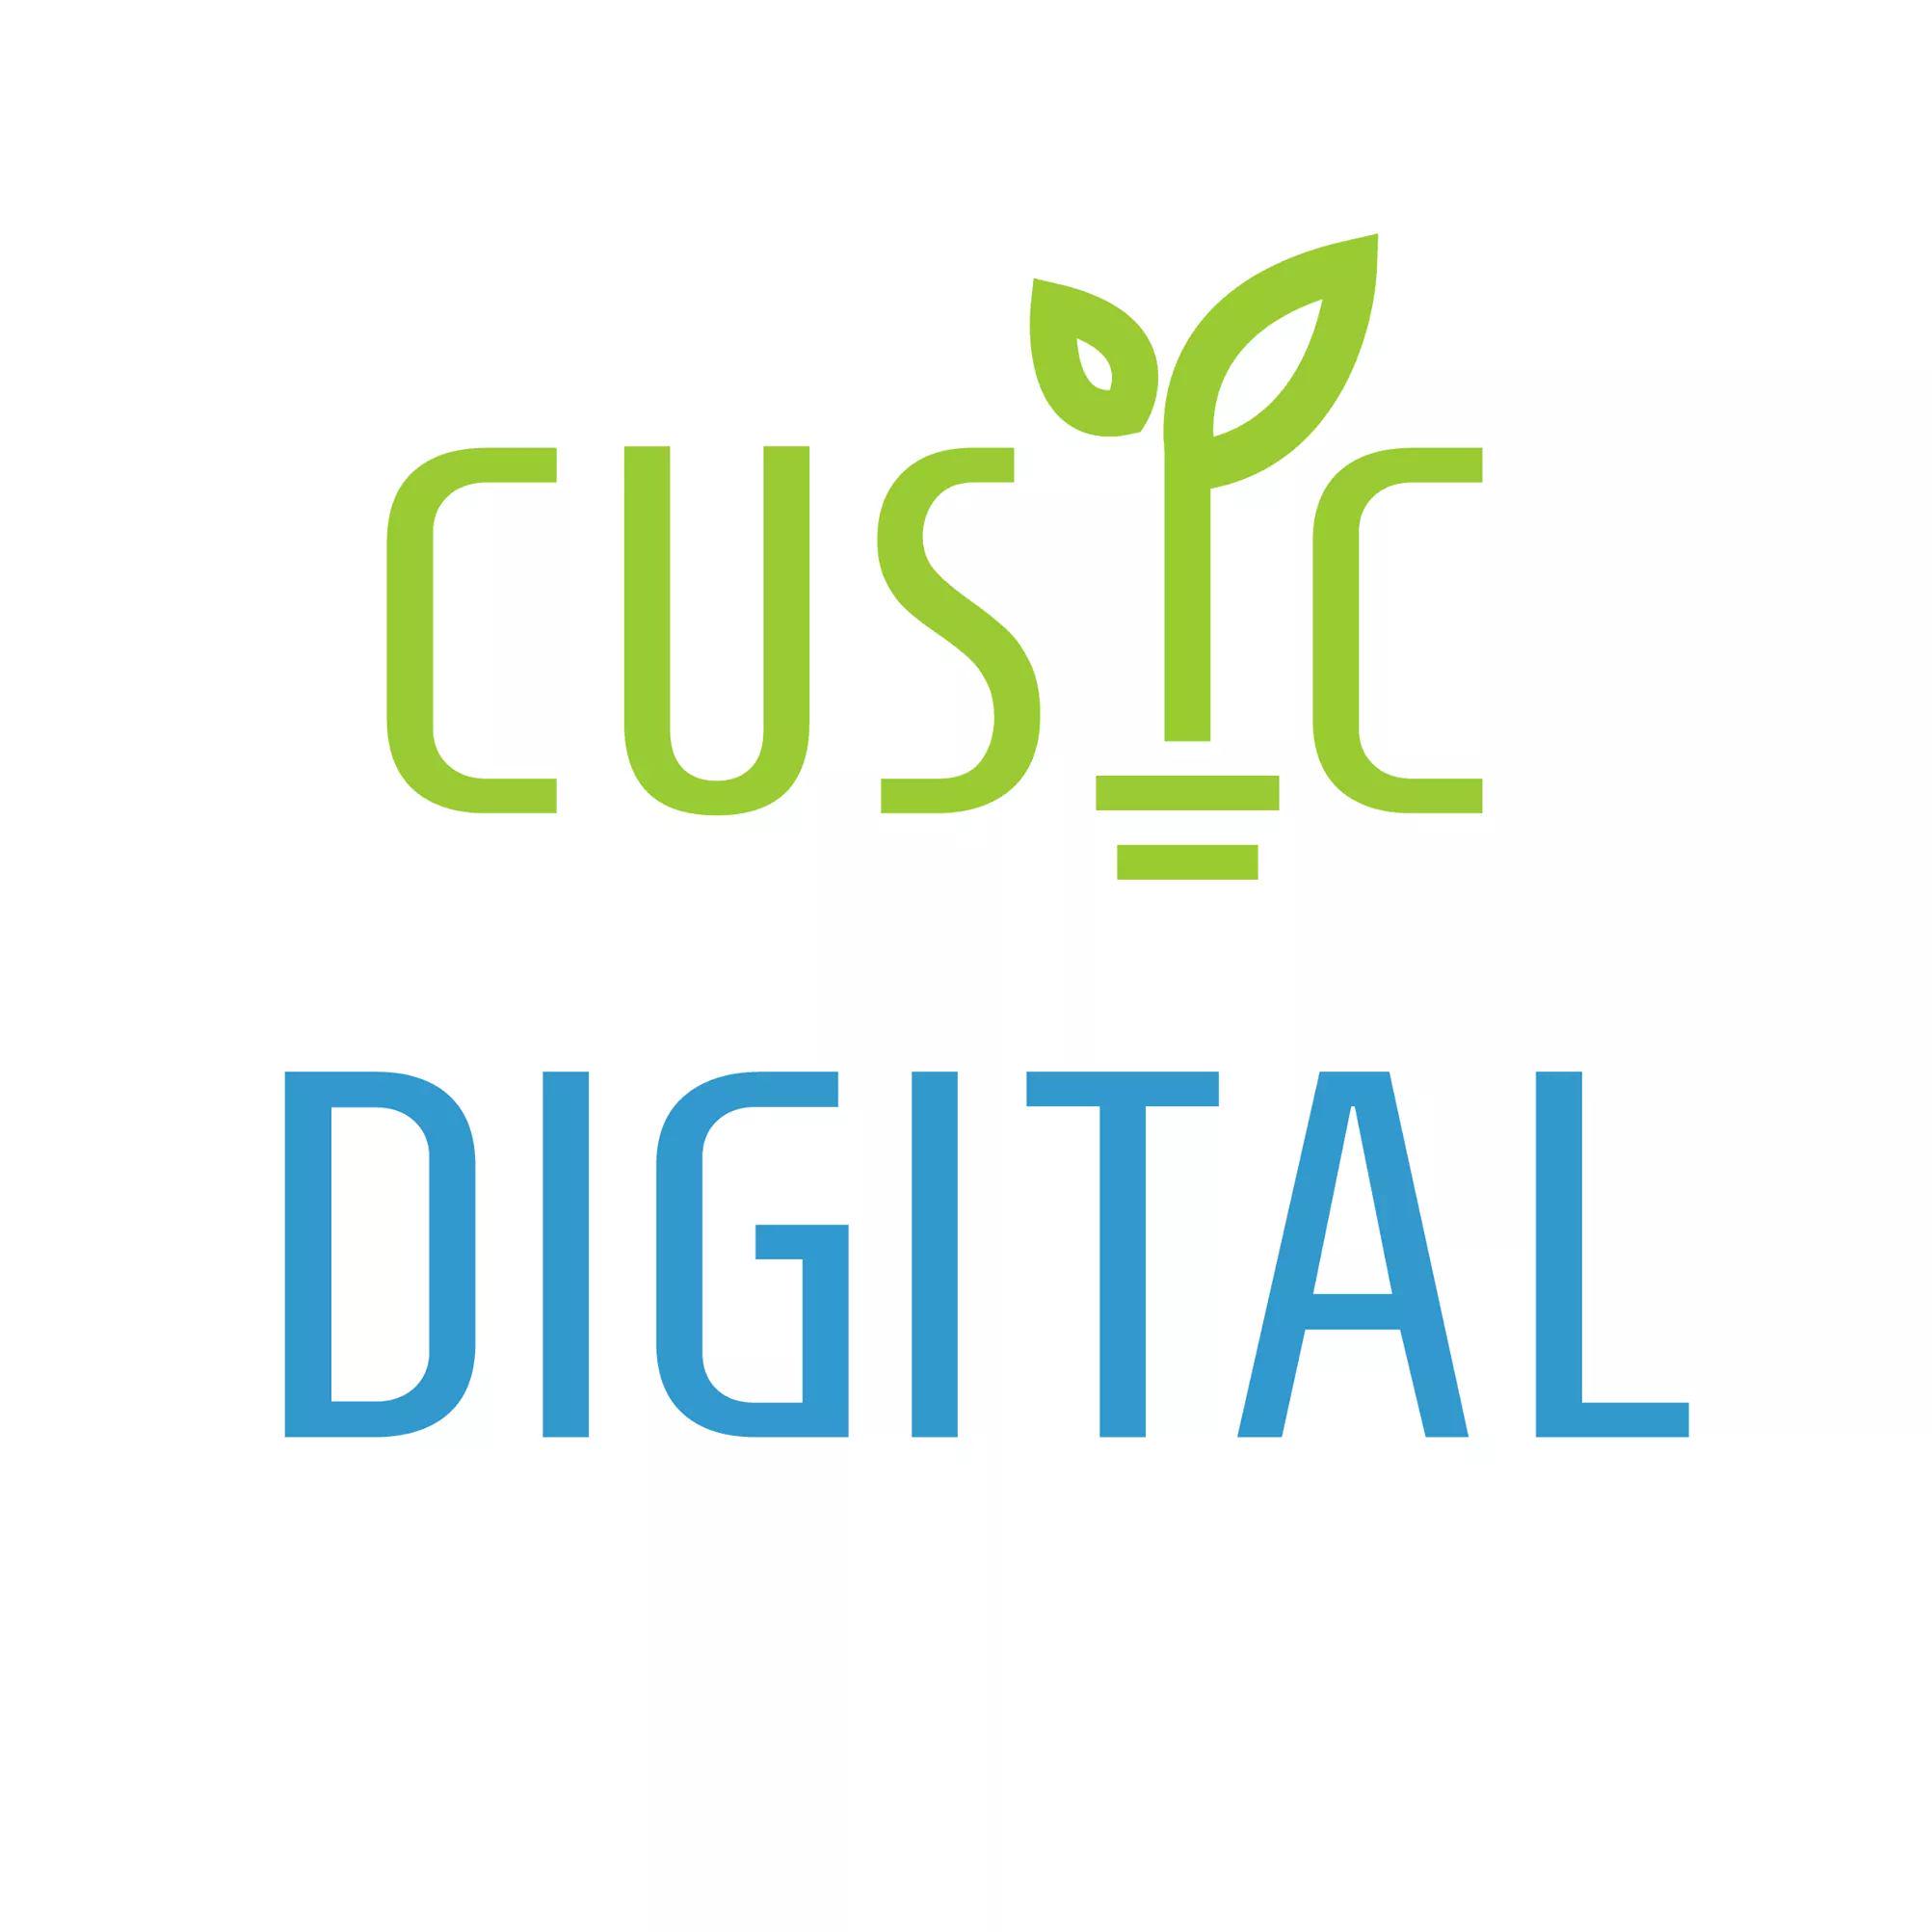 Cusic Digital profile on Qualified.One